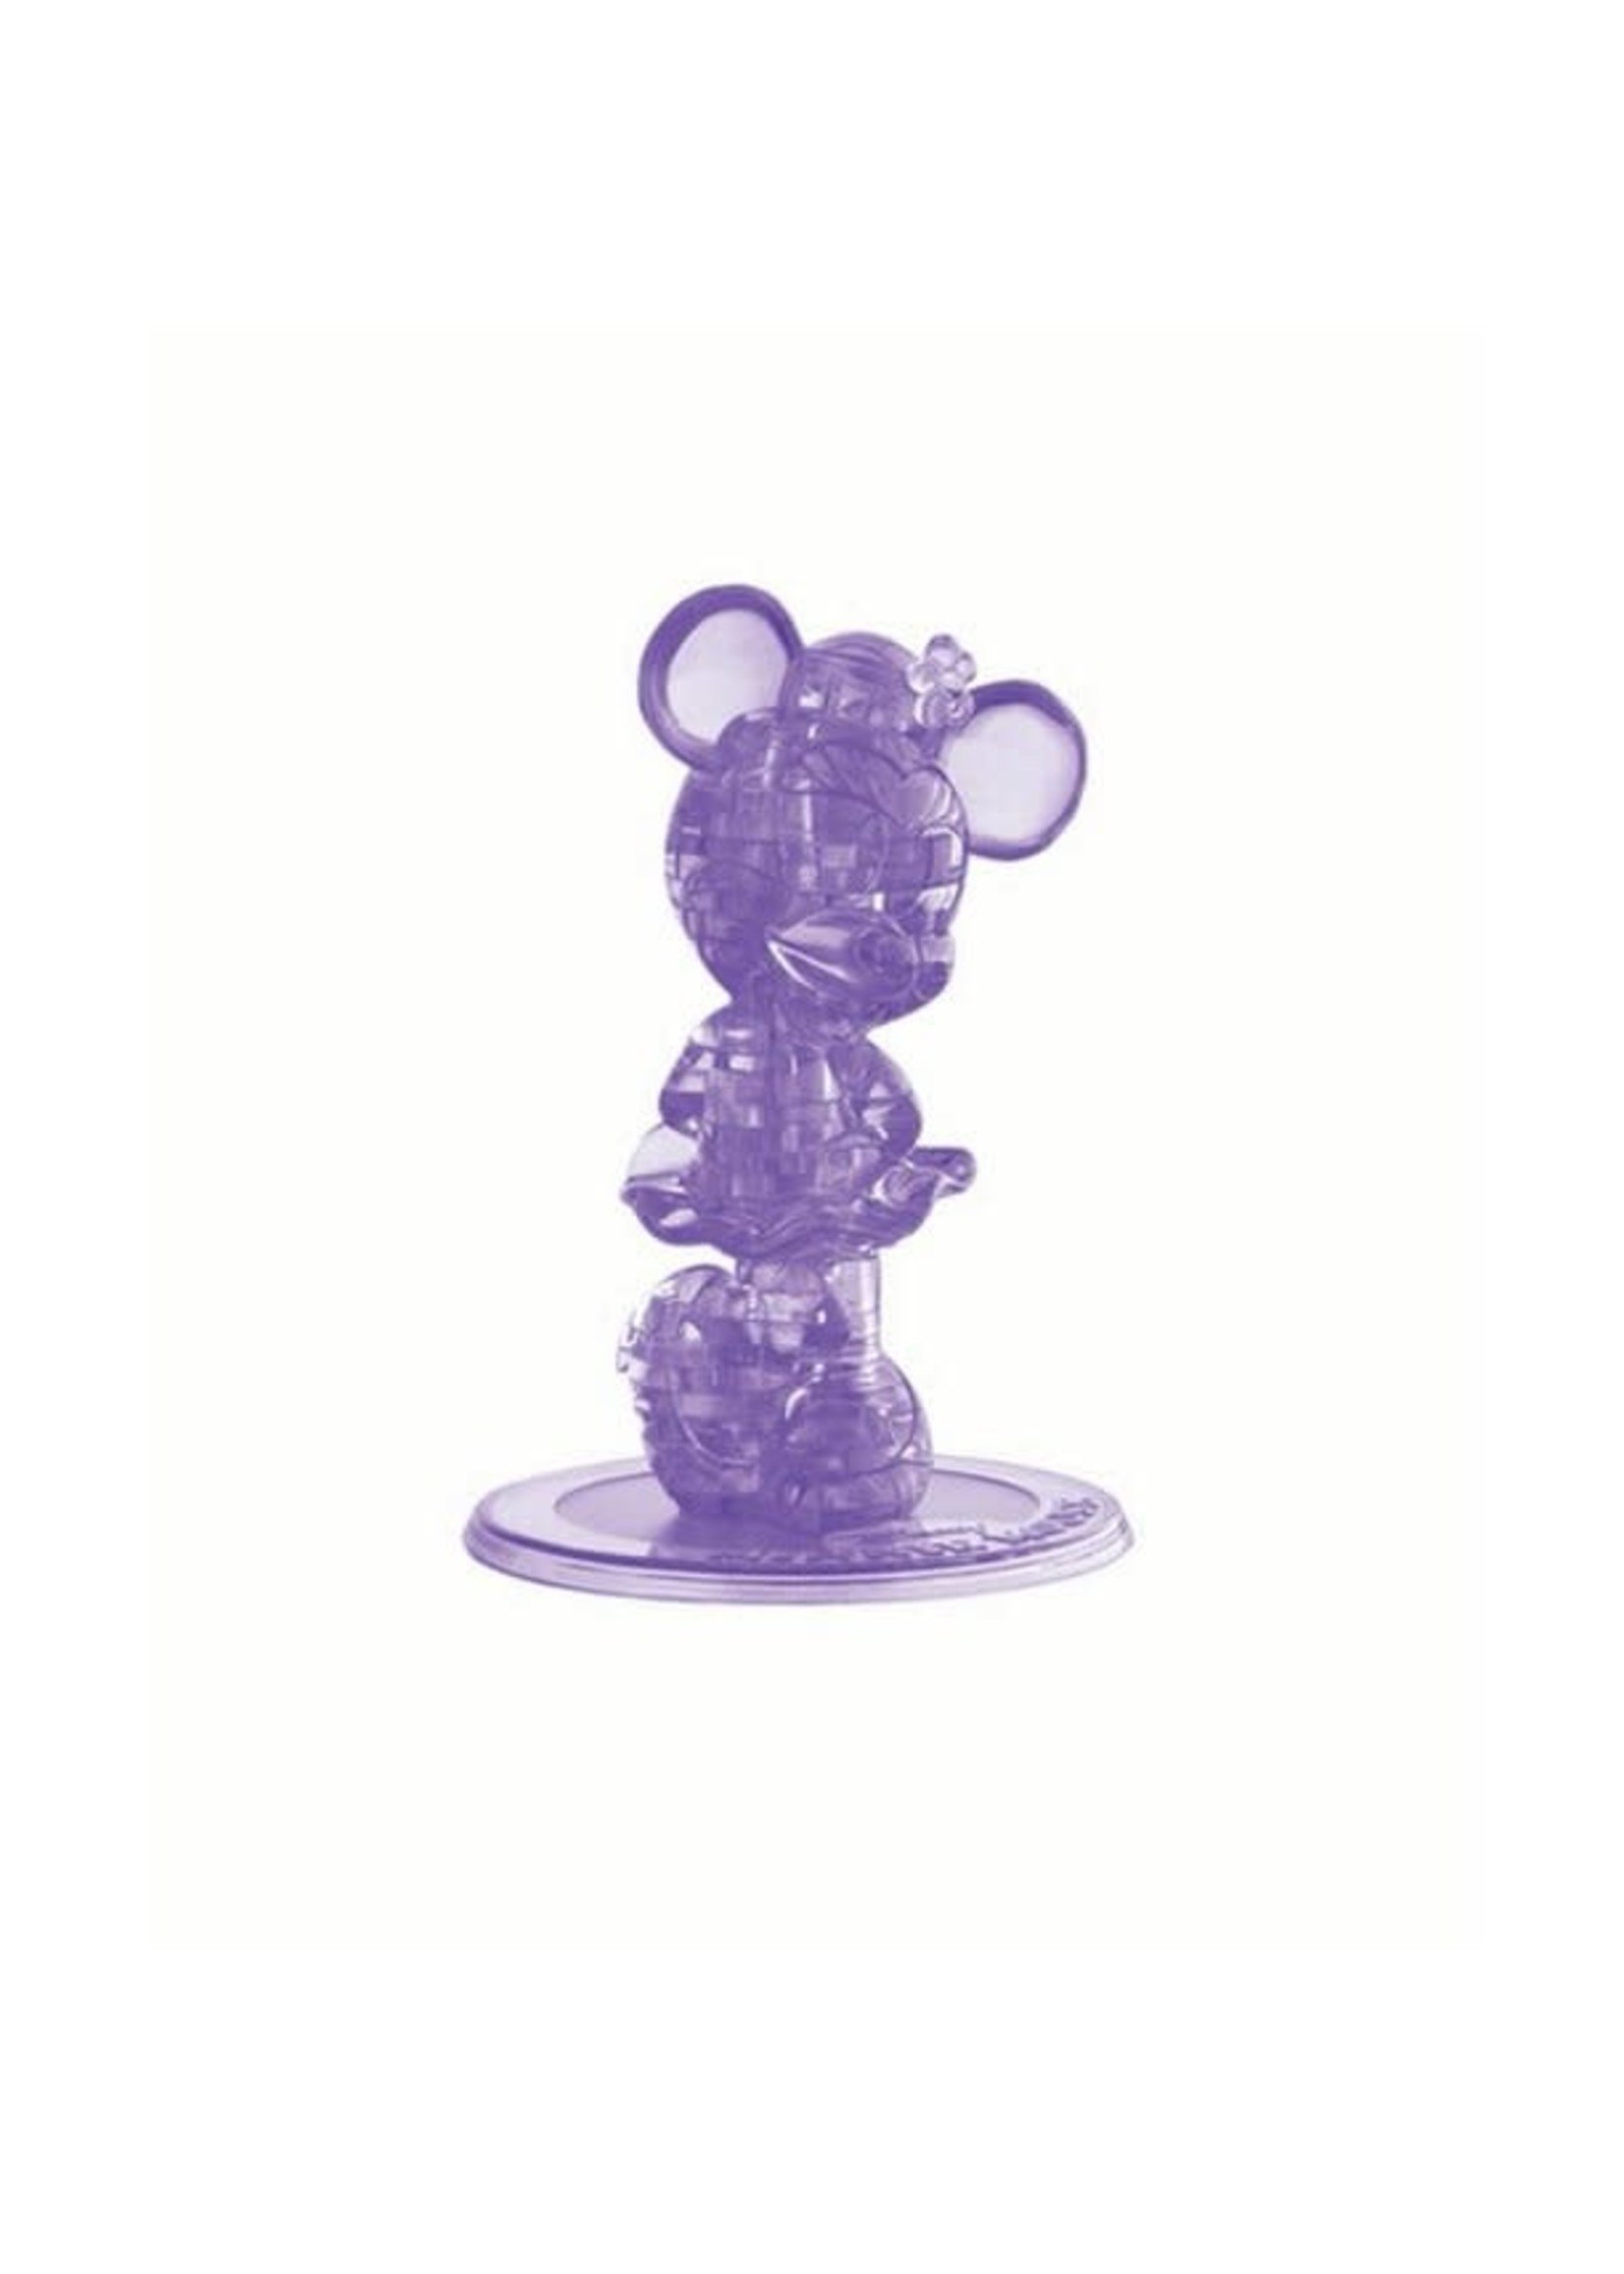 3D Crystal Purple Minnie Mouse